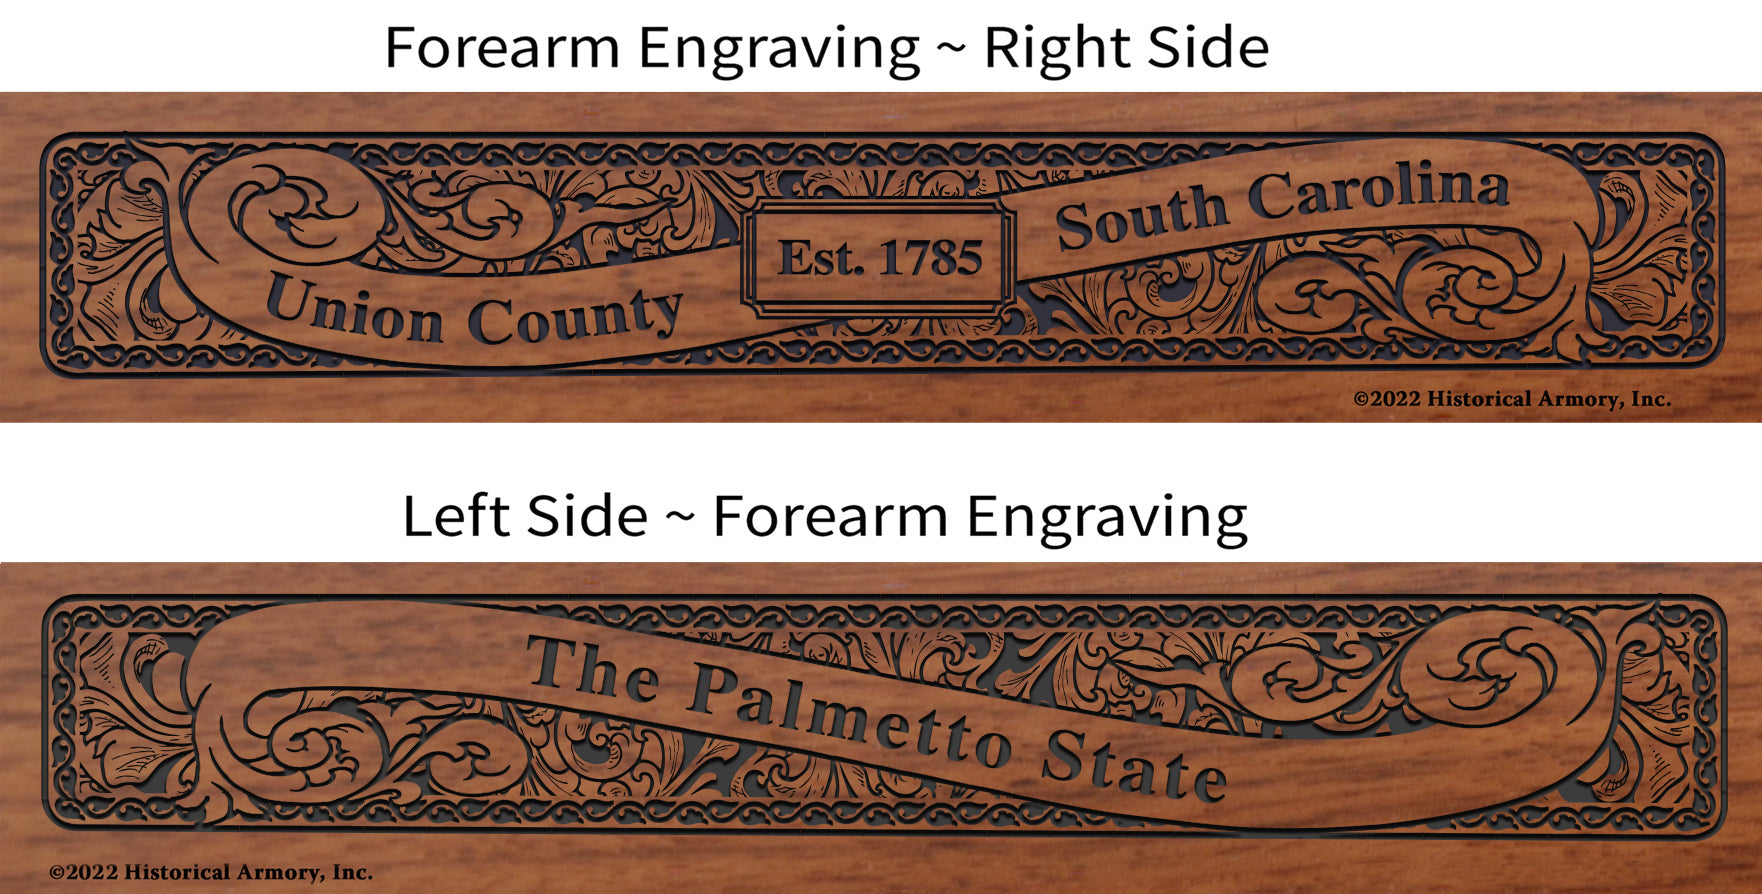 Union County South Carolina Engraved Rifle Forearm